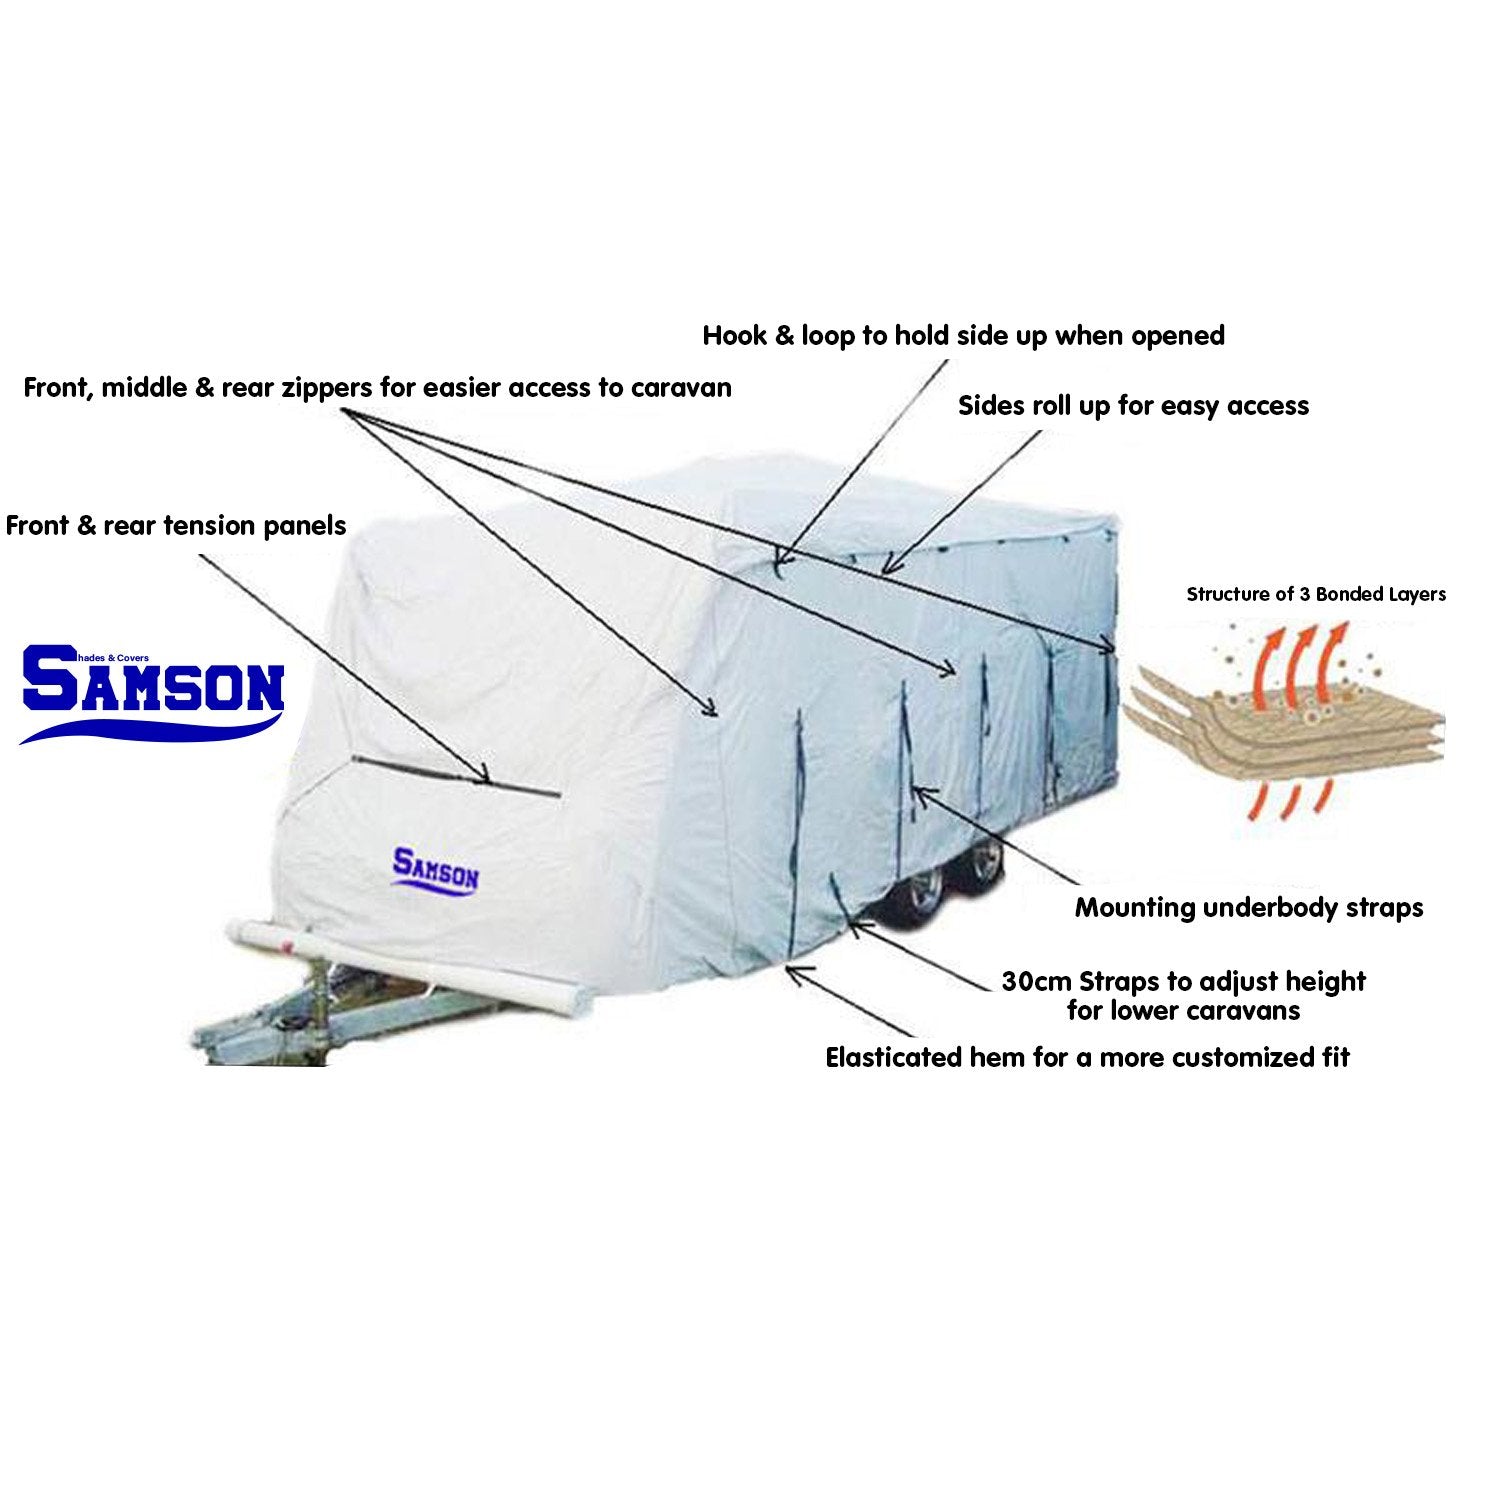 Samson Heavy Duty Caravan Cover 18-20ft